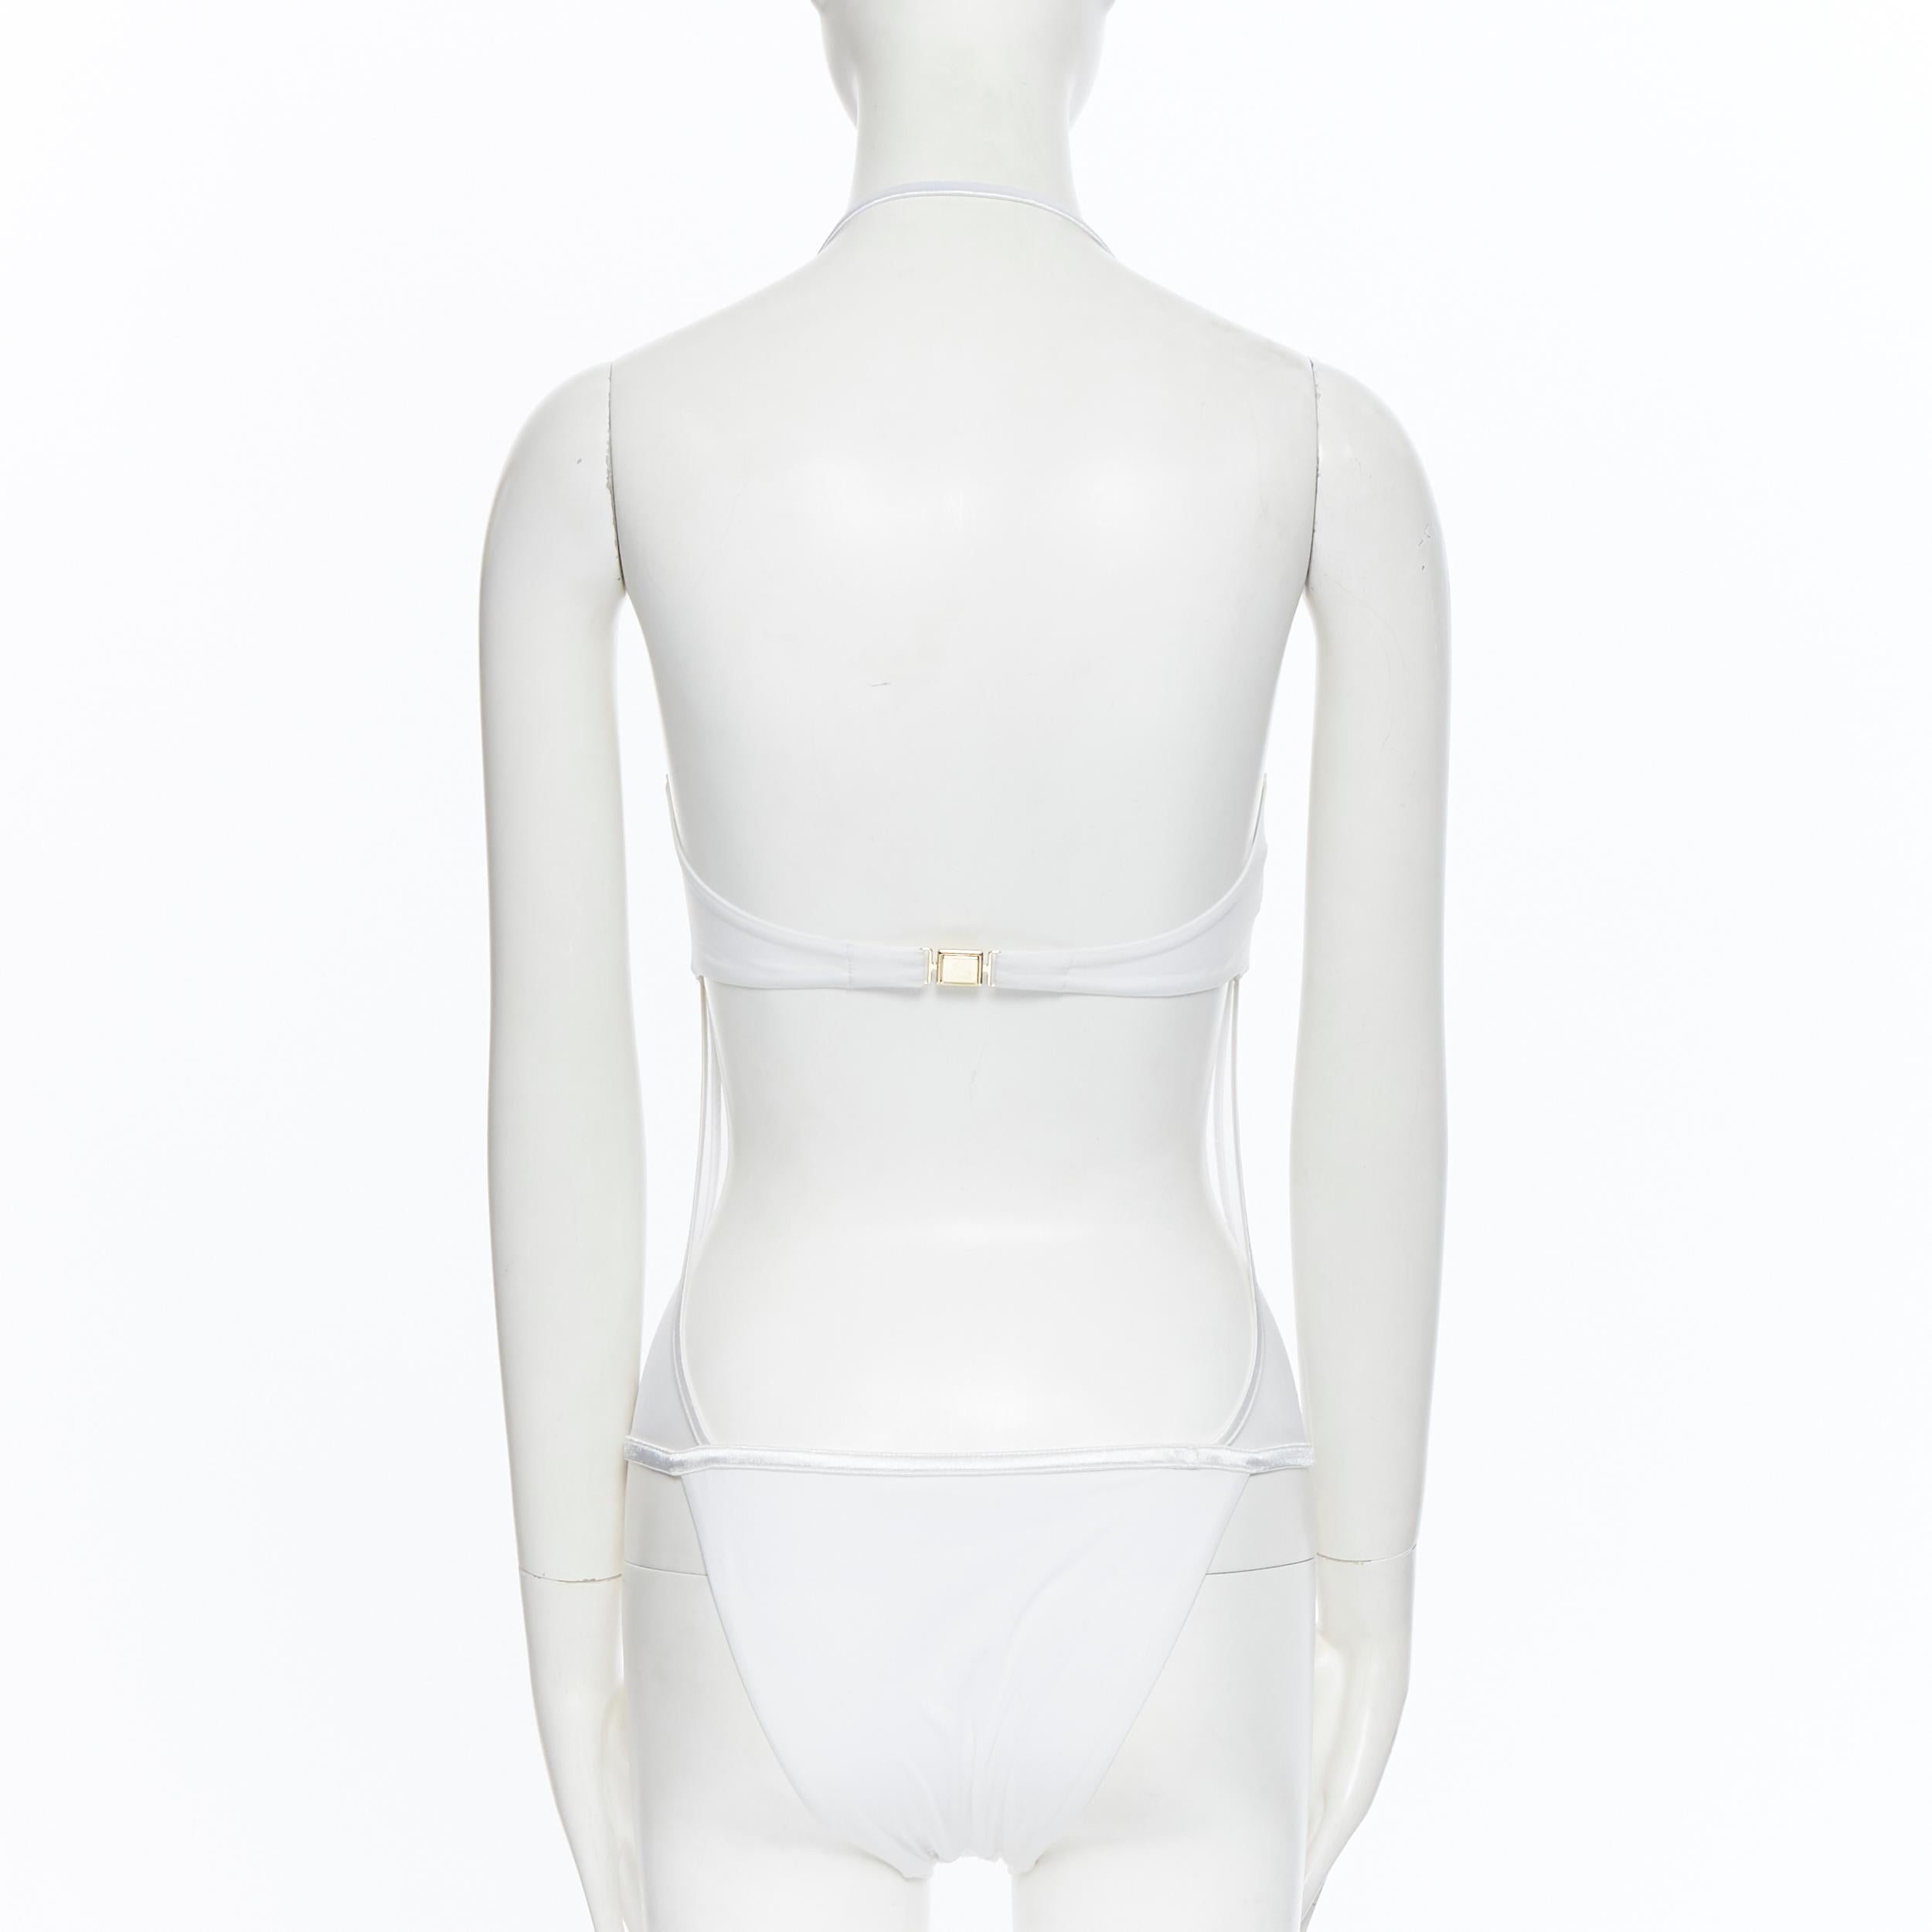 Gray new LA PERLA Graphique Couture white boned sheer body monokini swimsuit IT44B M